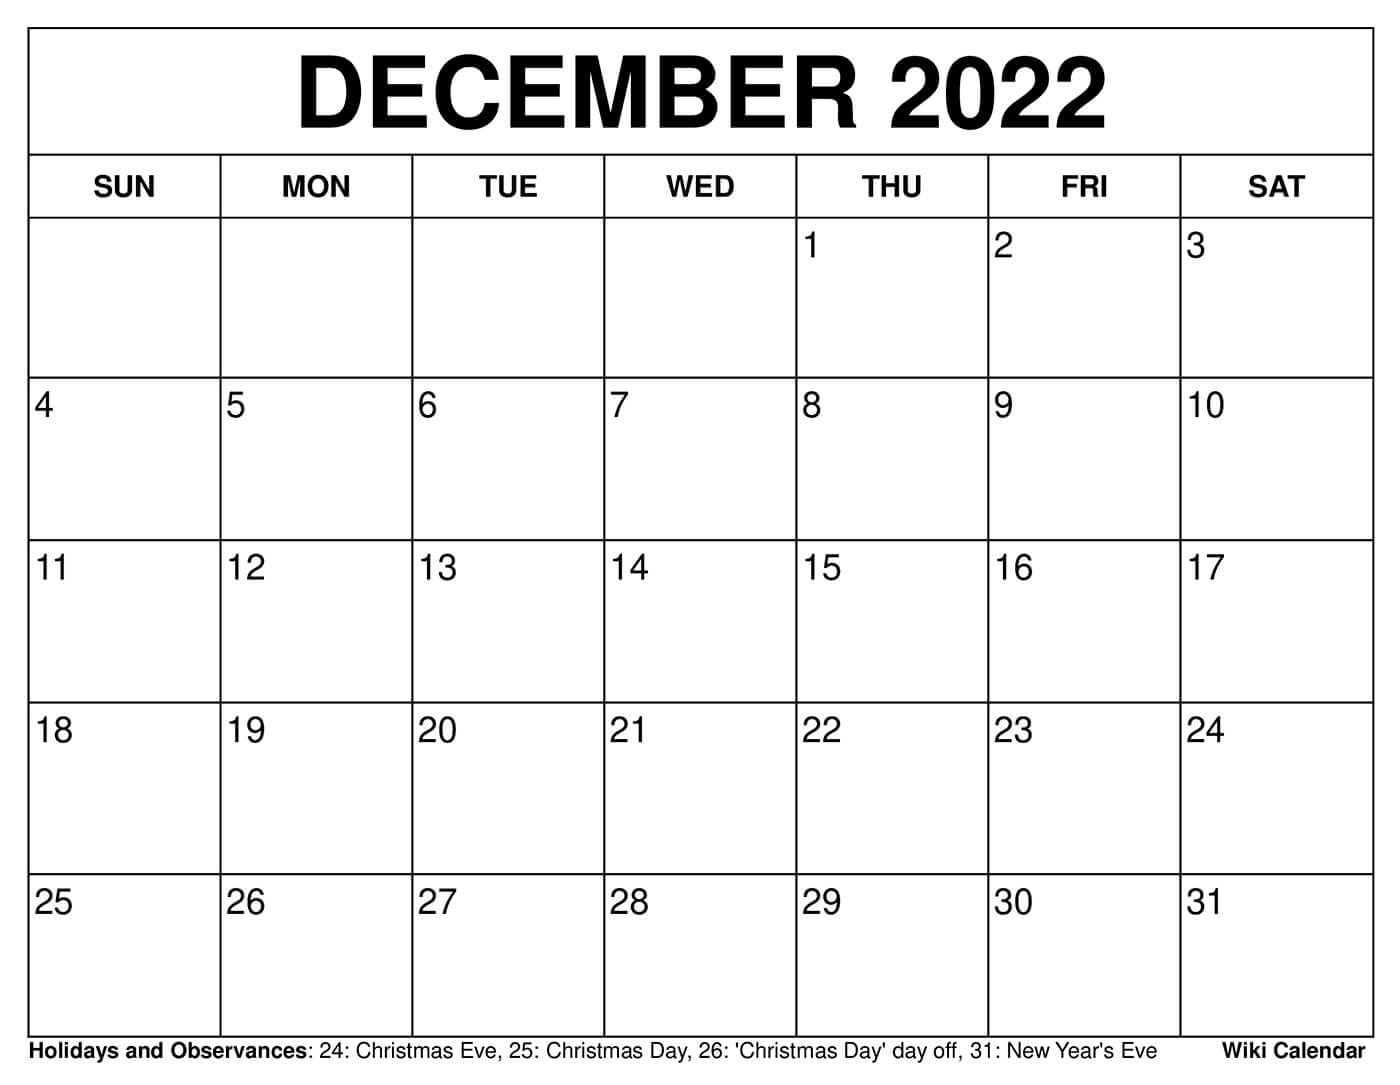 December 2022 Calendar Template Free Printable December 2022 Calendars - Wiki Calendar